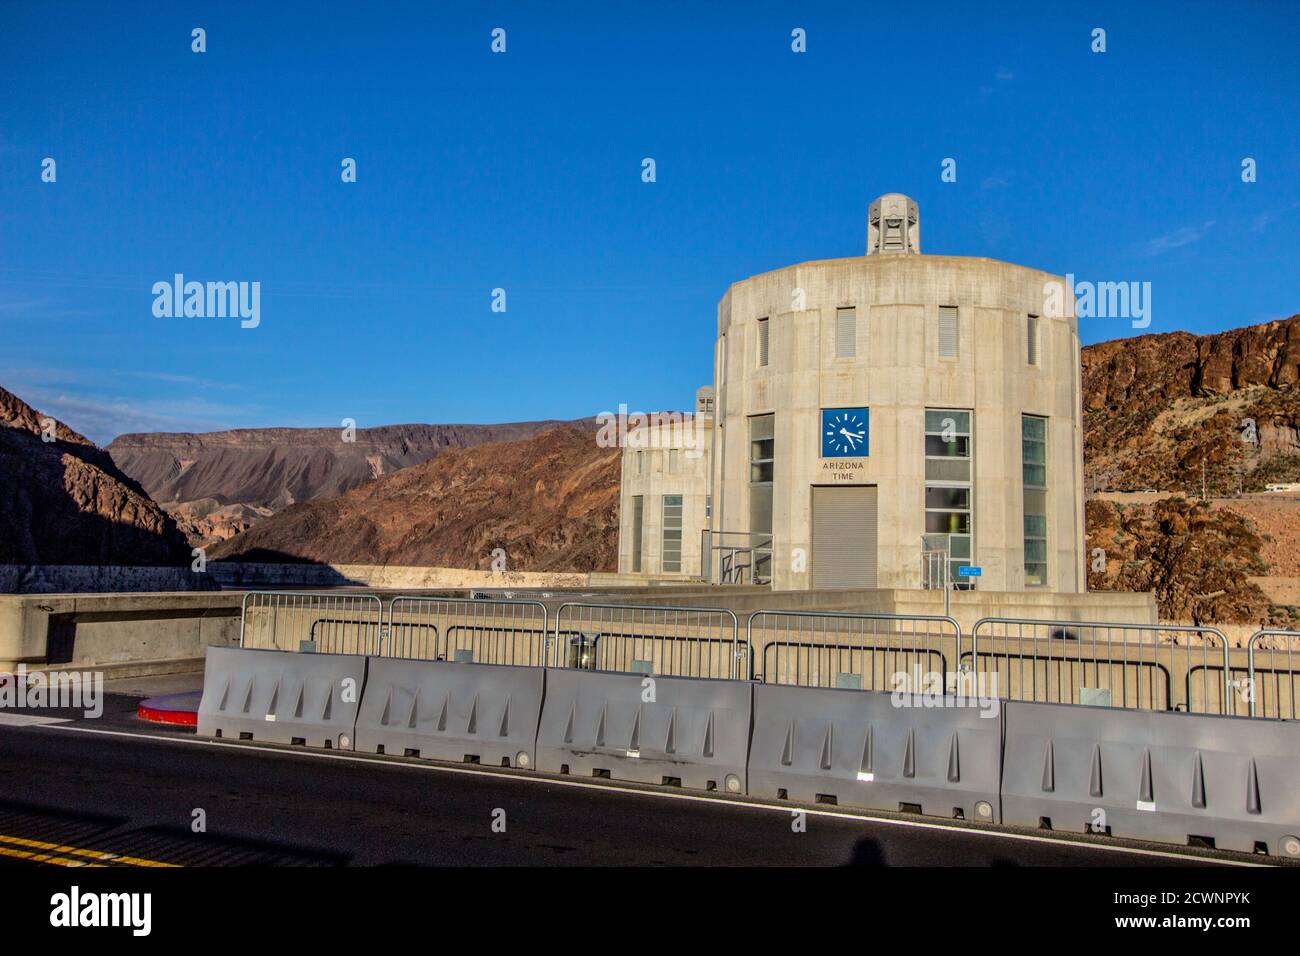 Arizona Time. Large clock displays Arizona time at the Hoover Dam on the Nevada and Arizona state border. Stock Photo